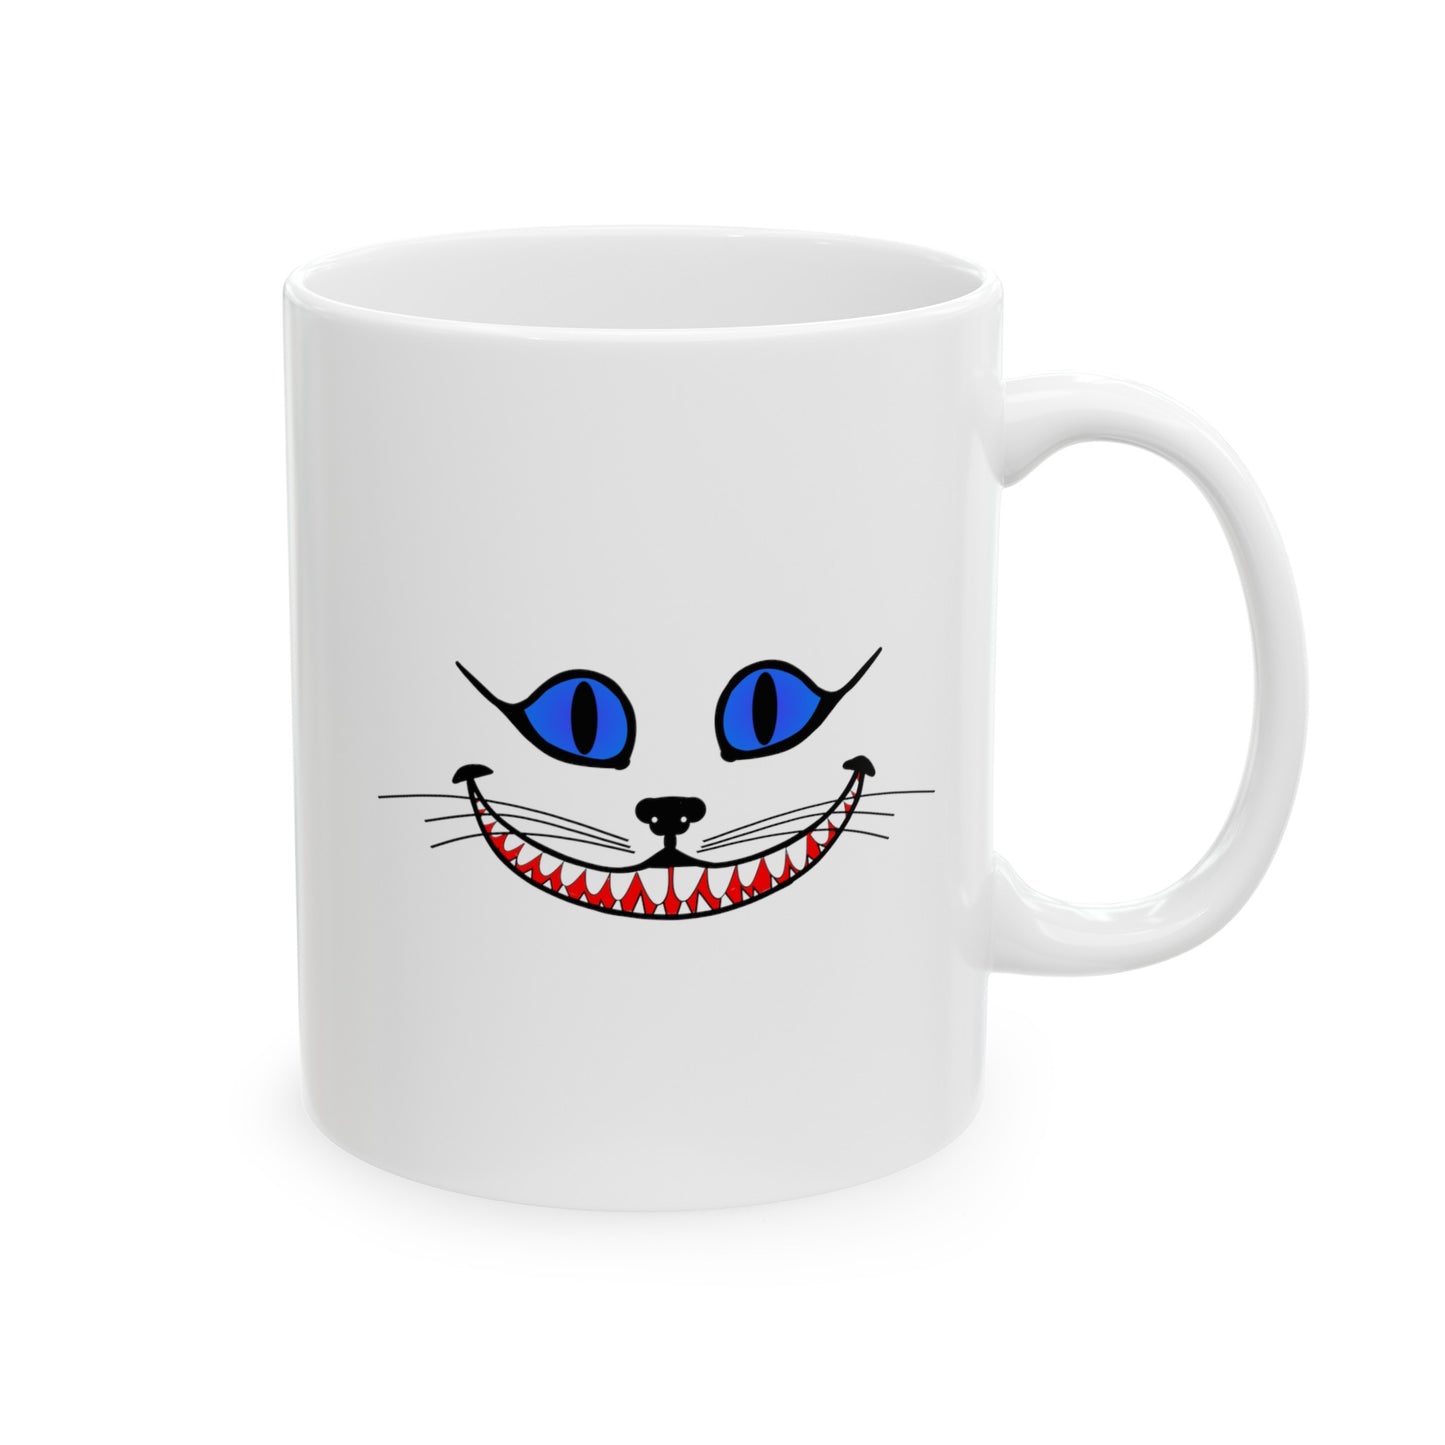 Cheshire Cat Coffee Mug - Double Sided White Ceramic 11oz by TheGlassyLass.com